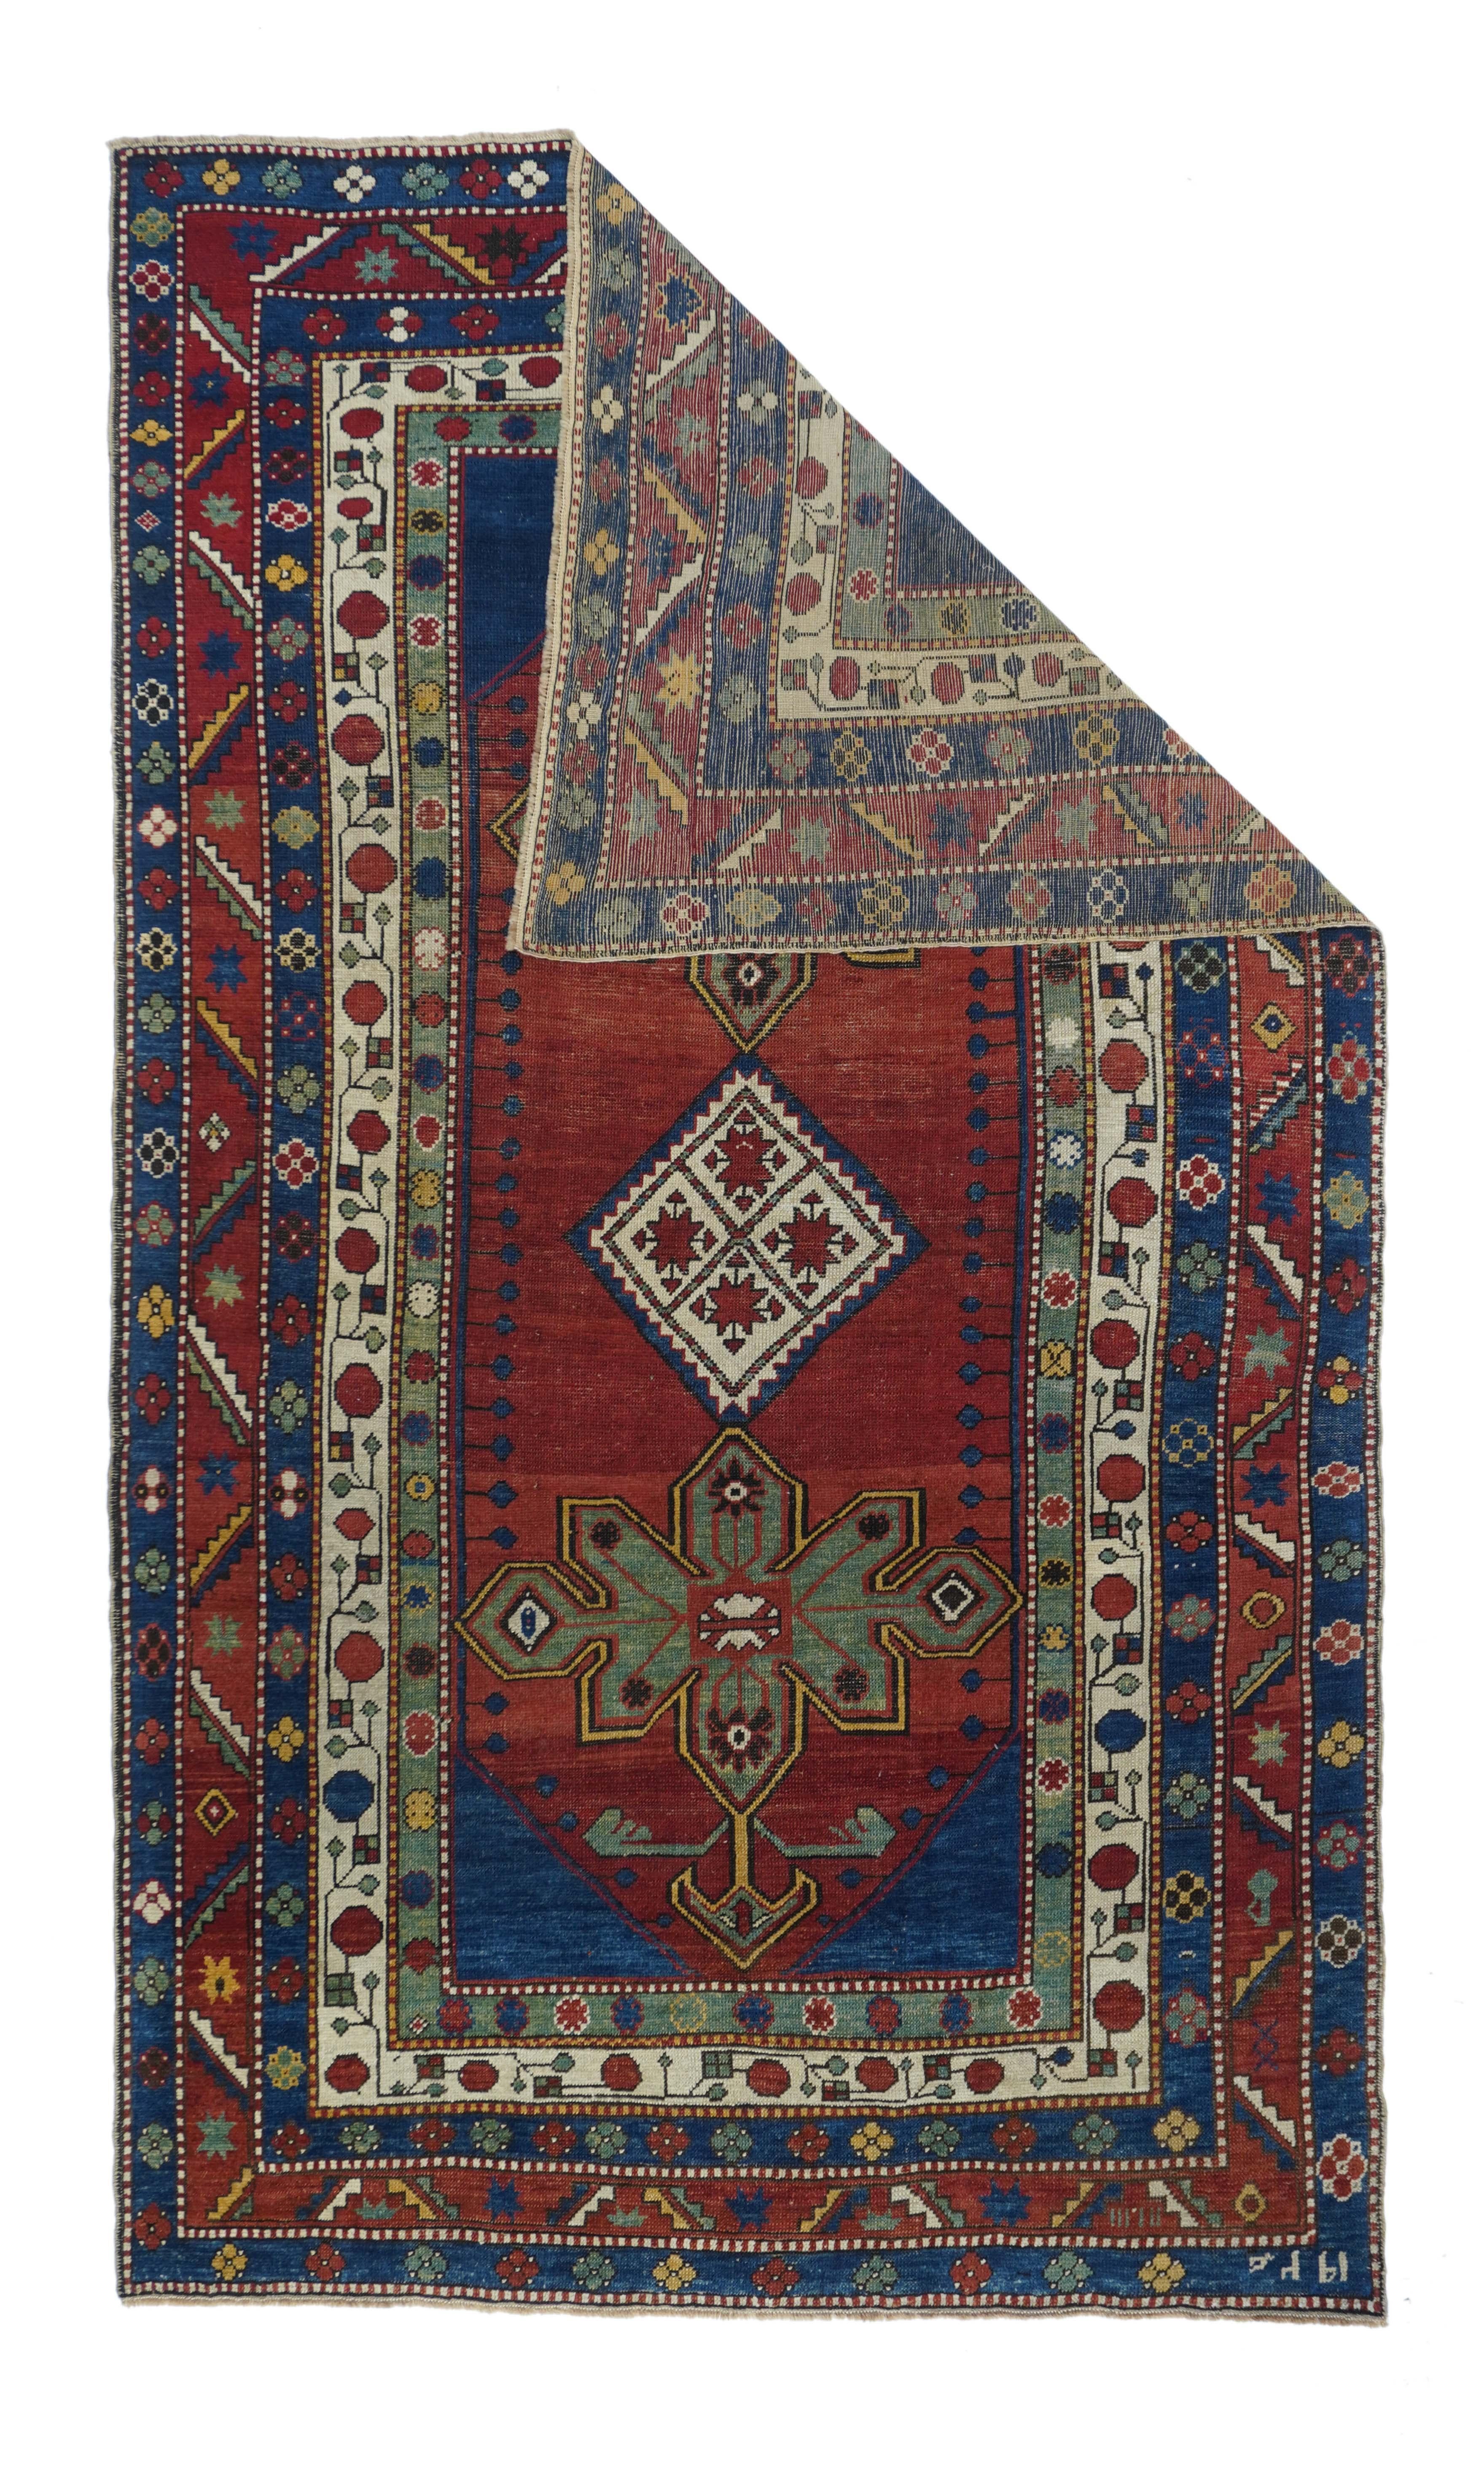 Antique Karabagh Kazak rug 5' x 8'11''.